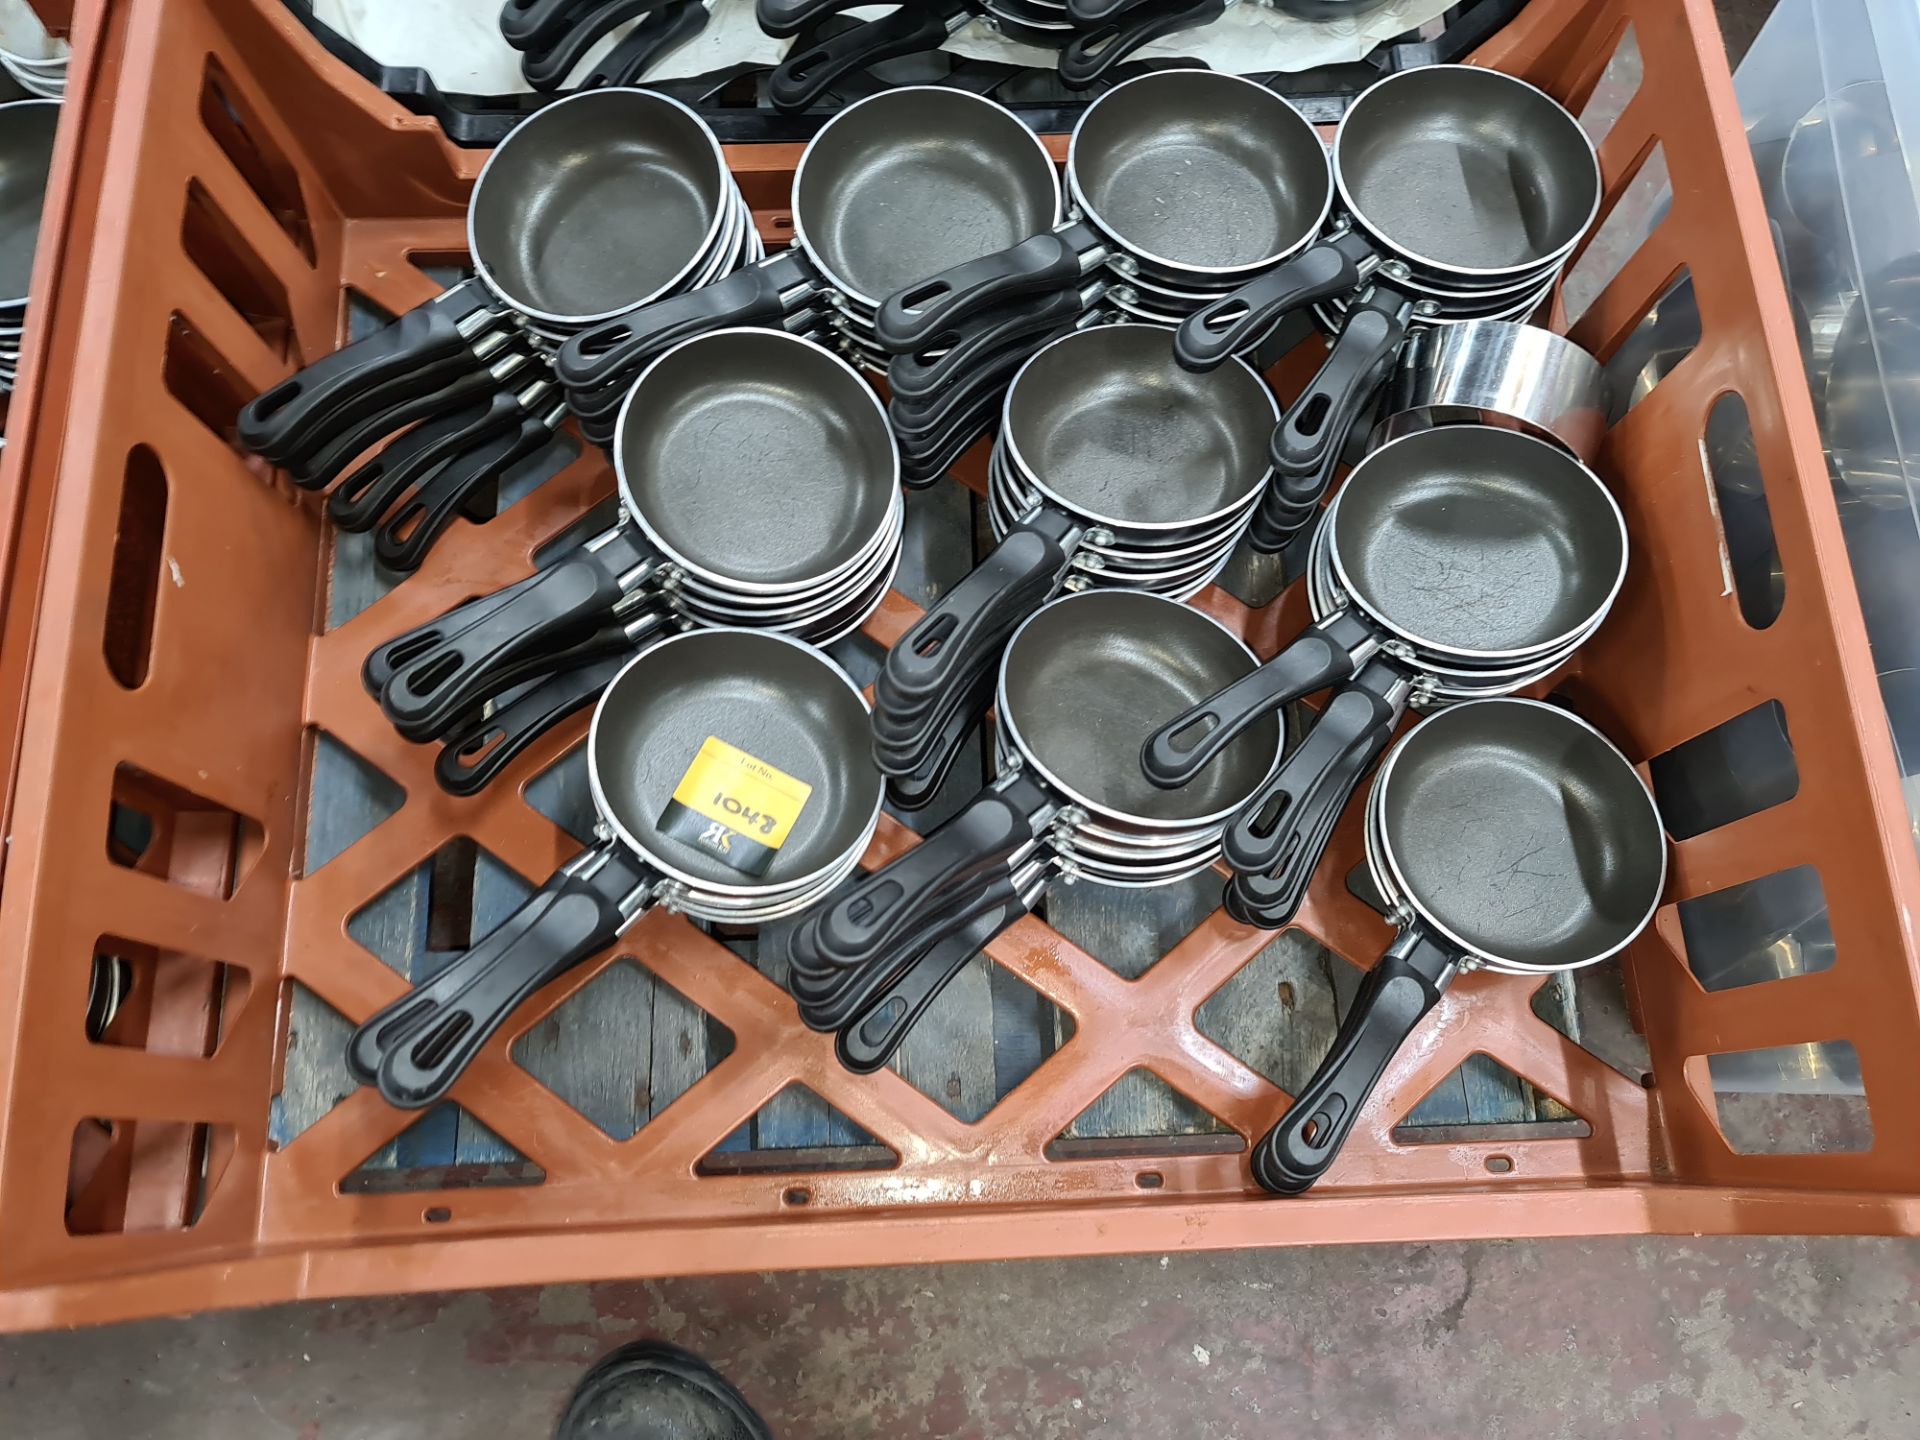 47 off miniature frying pans